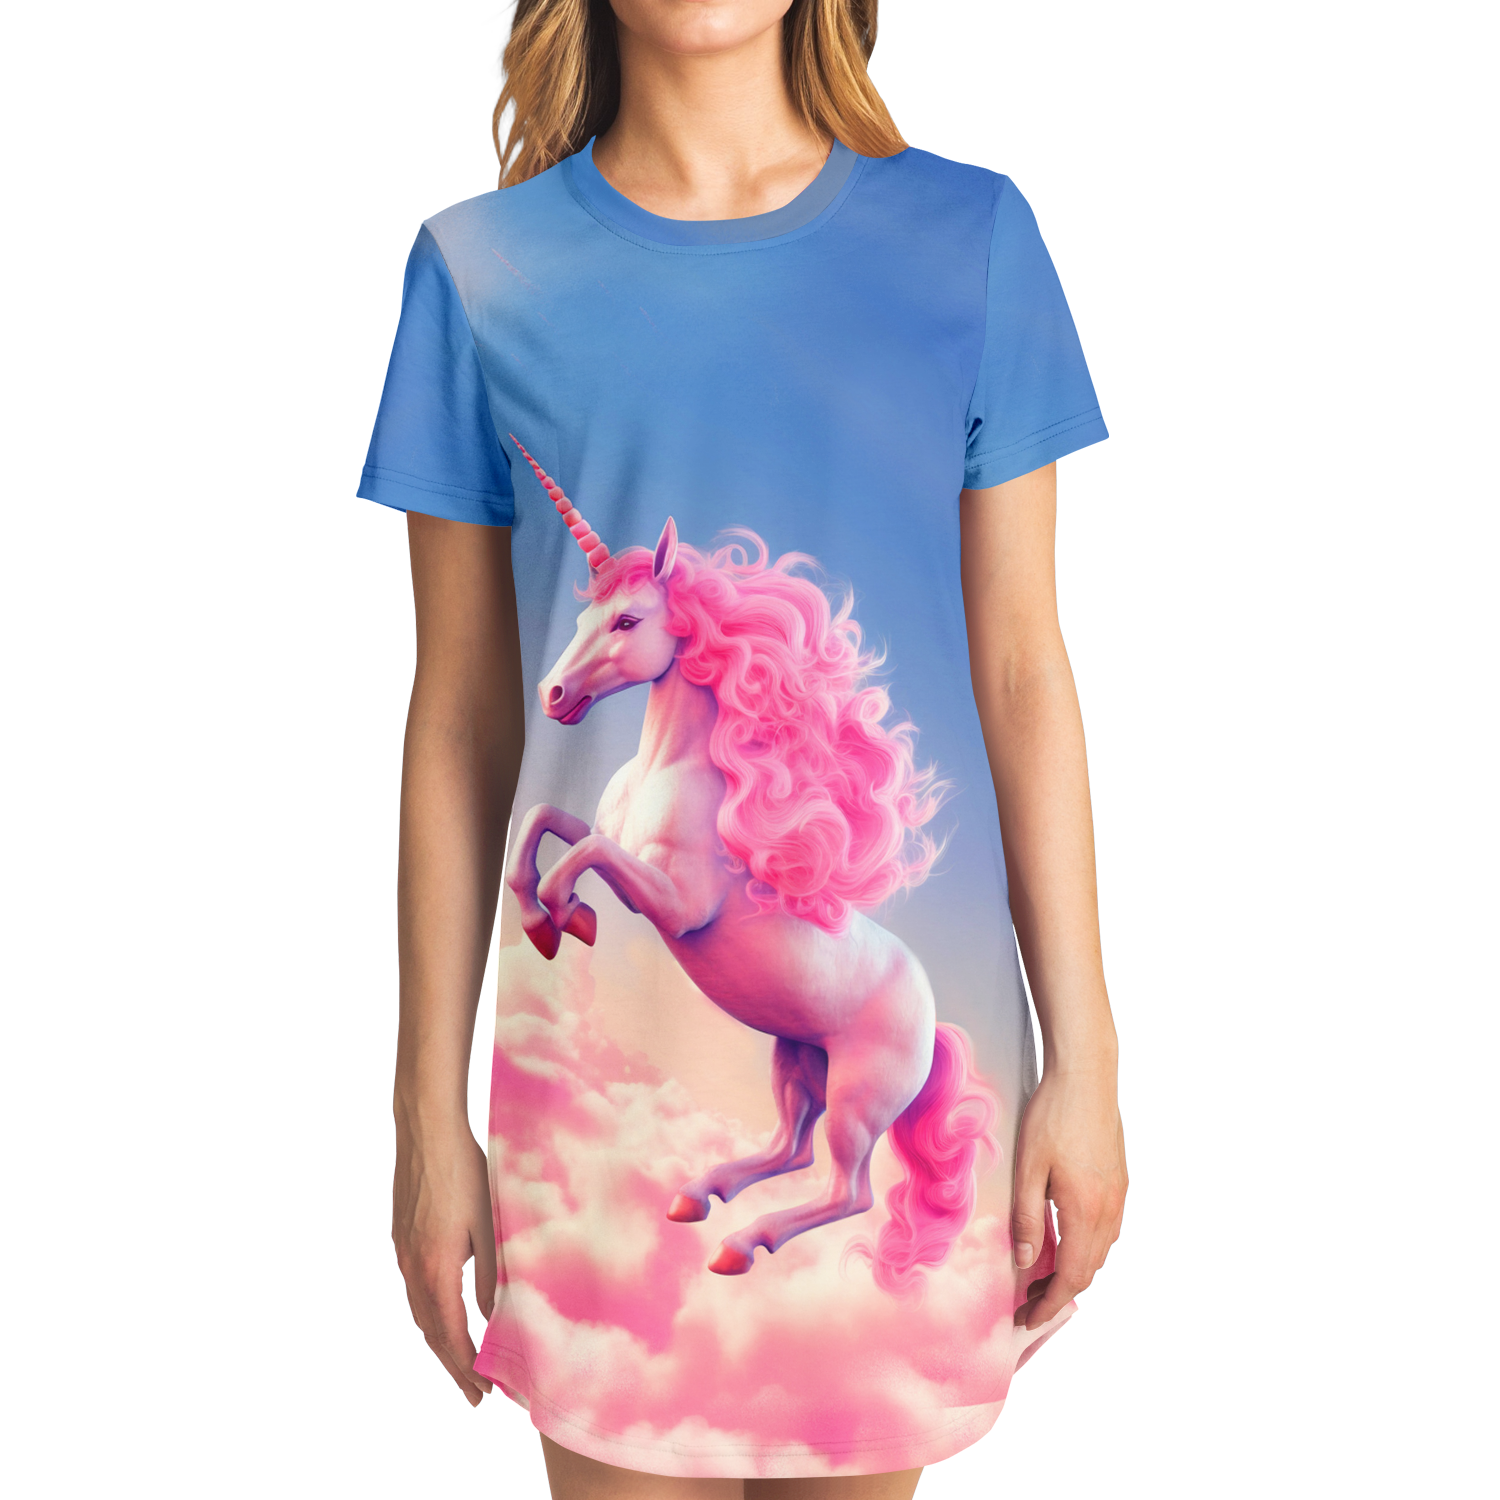 <alt.Unicorn Universe T-Shirt Dress - Taufaa>